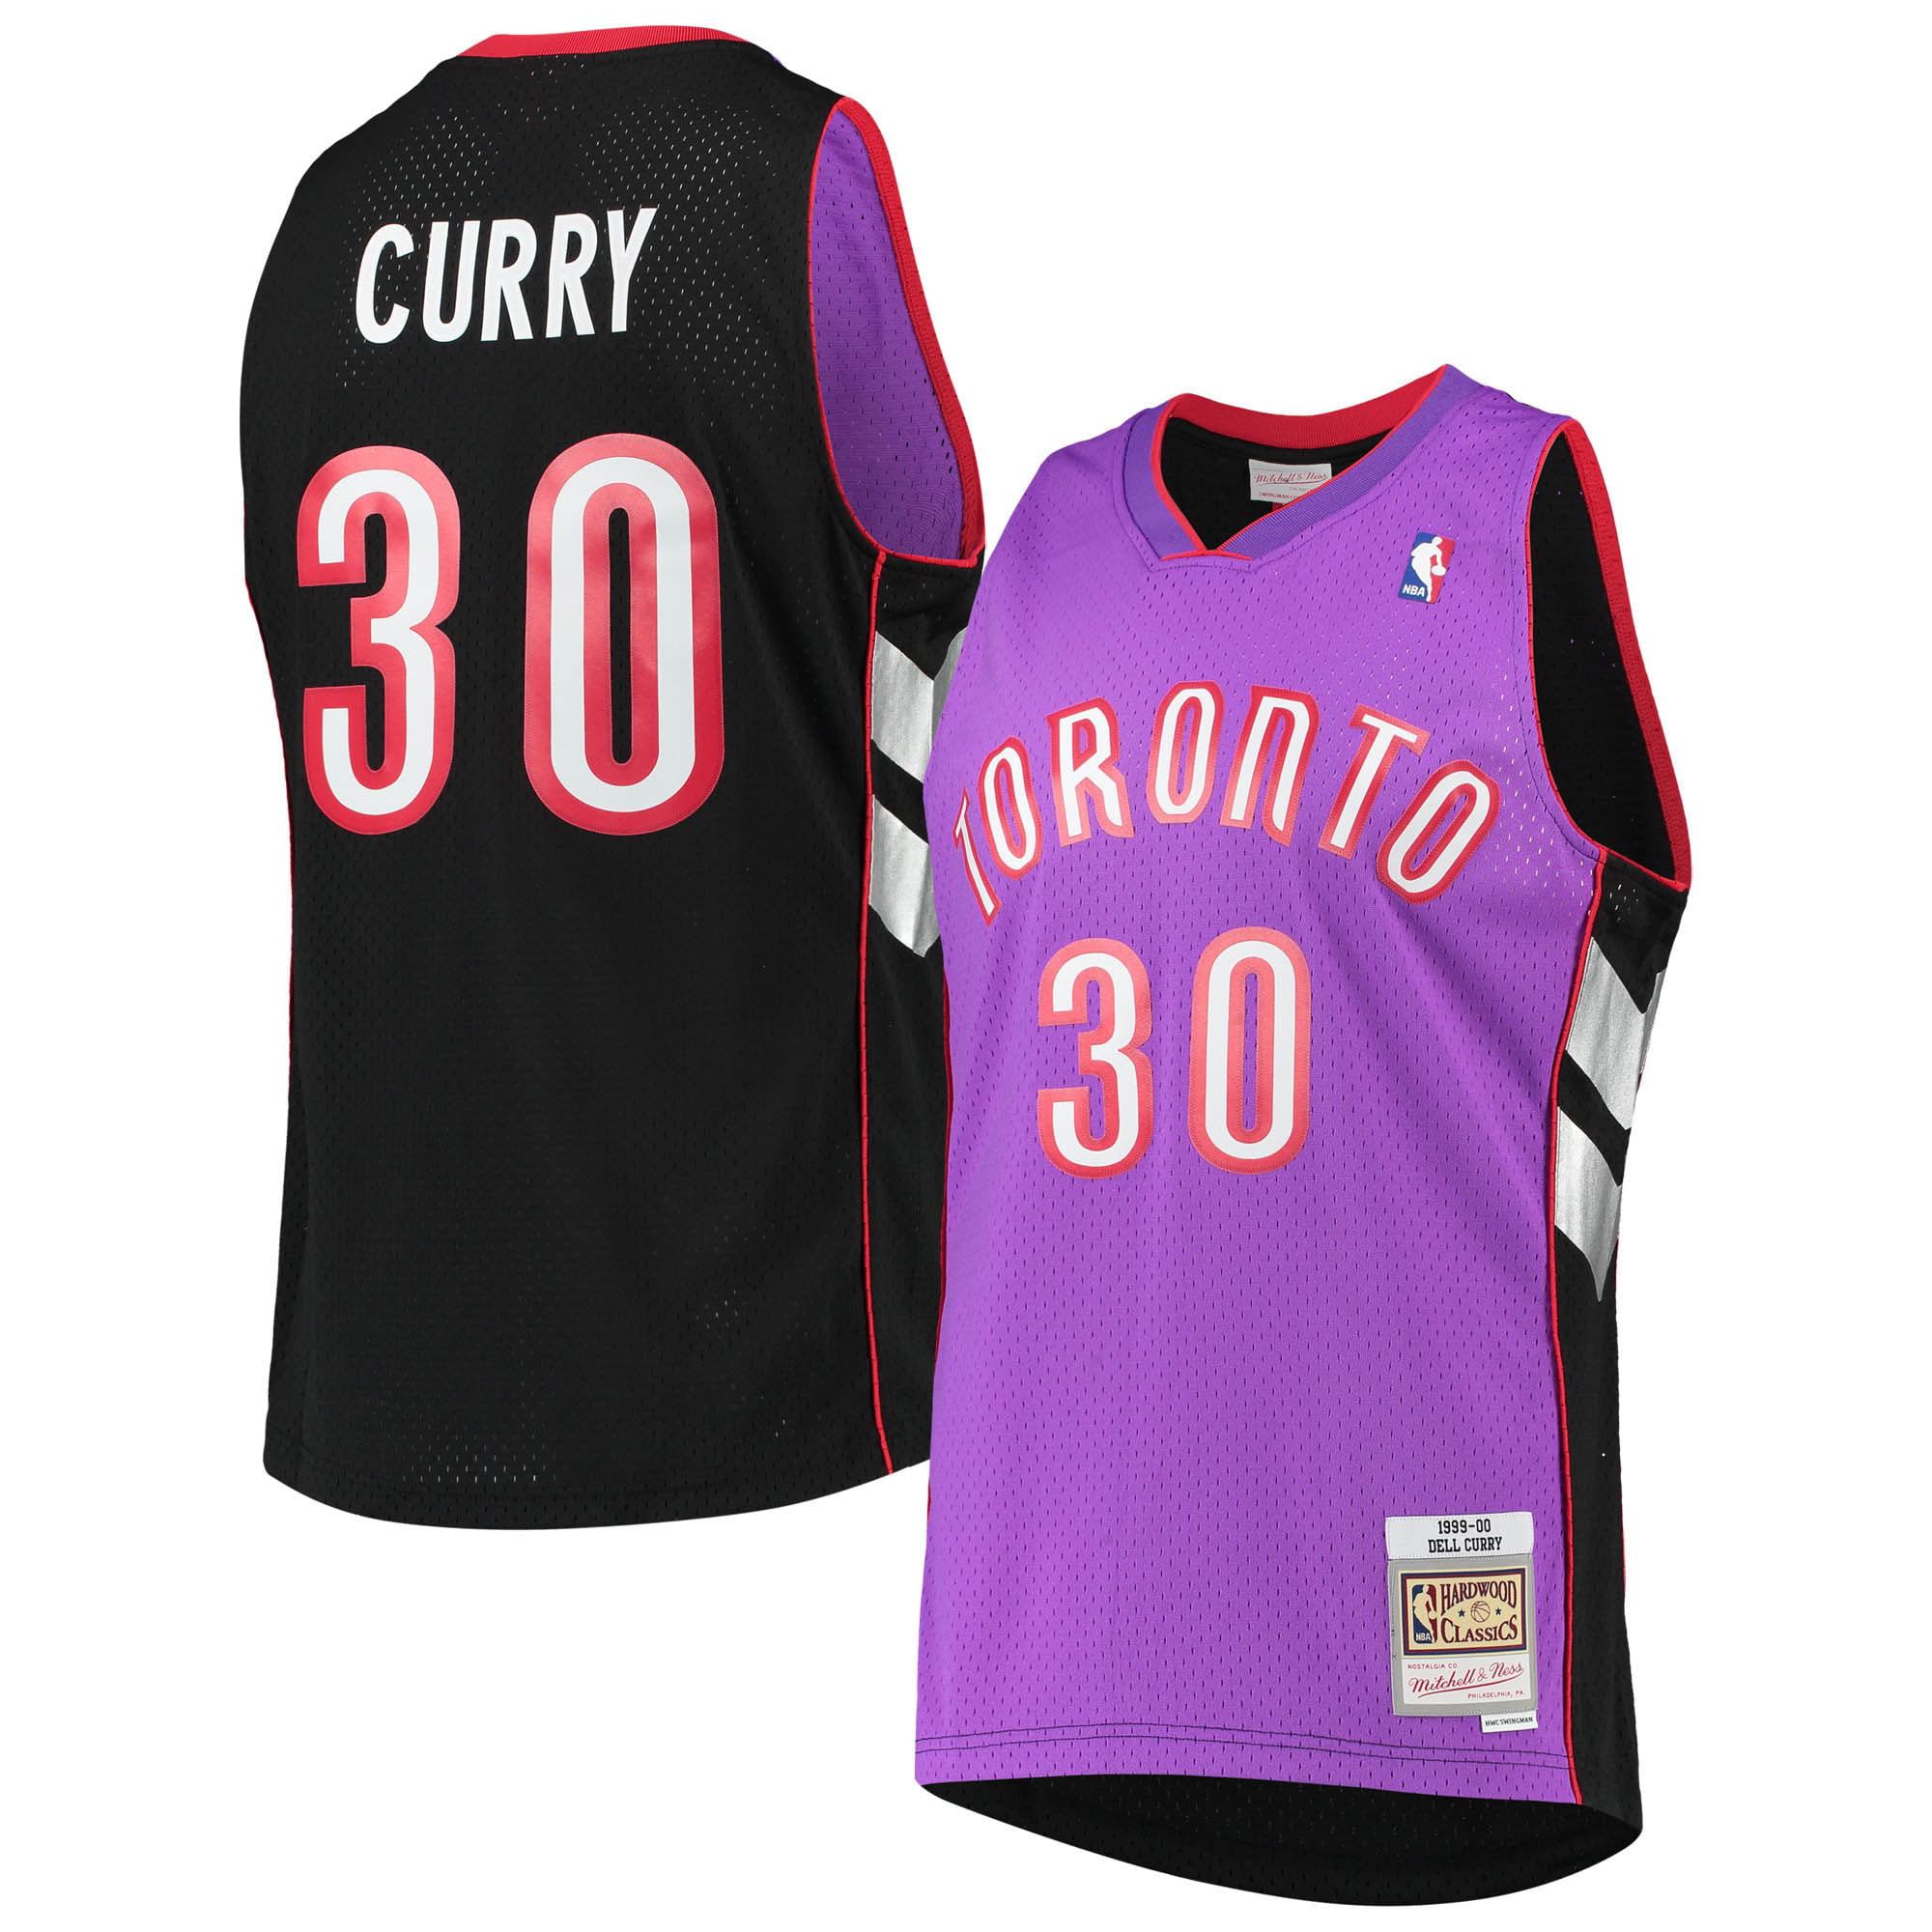 2001 Los Angeles Lakers Nike NBA Shooting Shirt Jersey Size XL